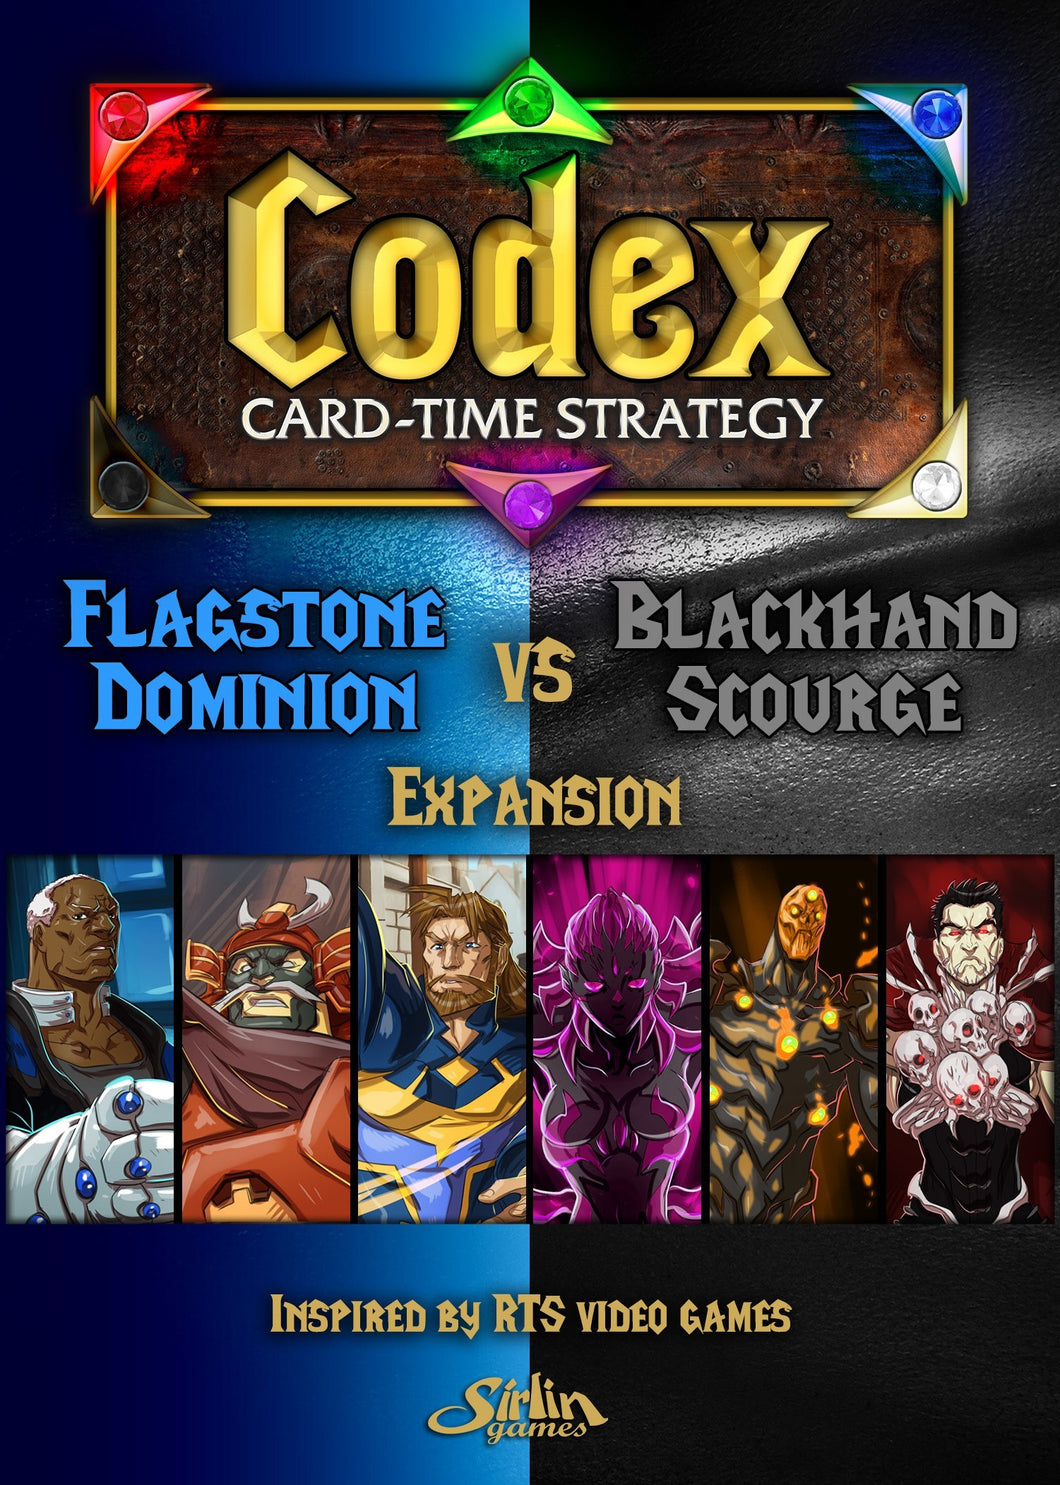 Codex Flagstone Dominion vs Blackhand Scourge Expansion